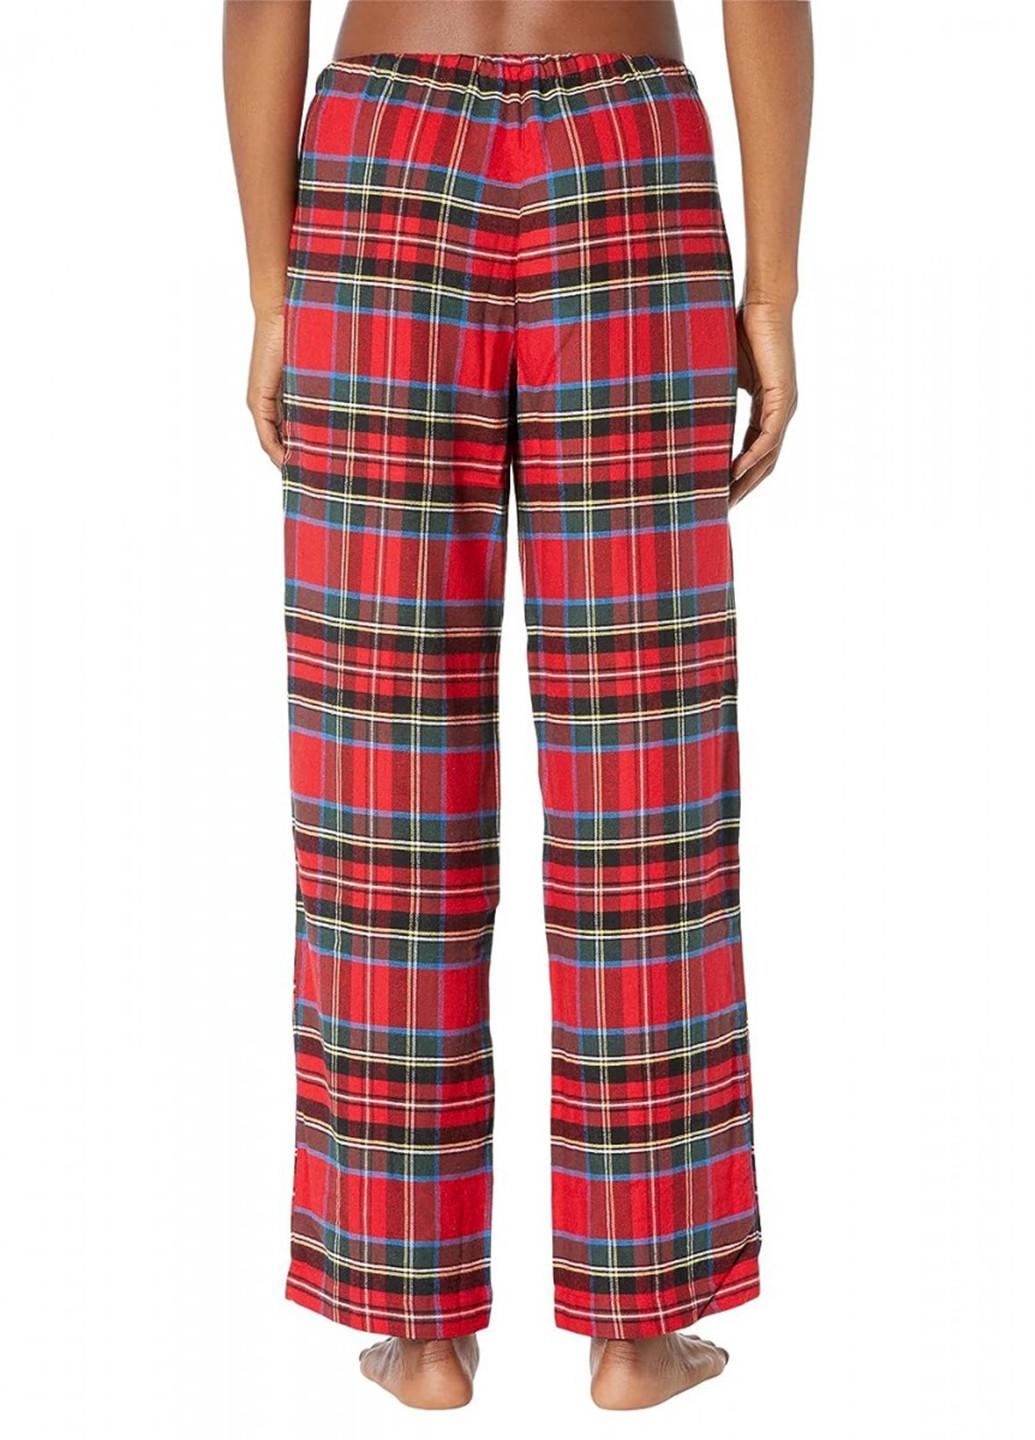 Червона всесезон піжама (сорочка, штани) рубашка + брюки Ralph Lauren